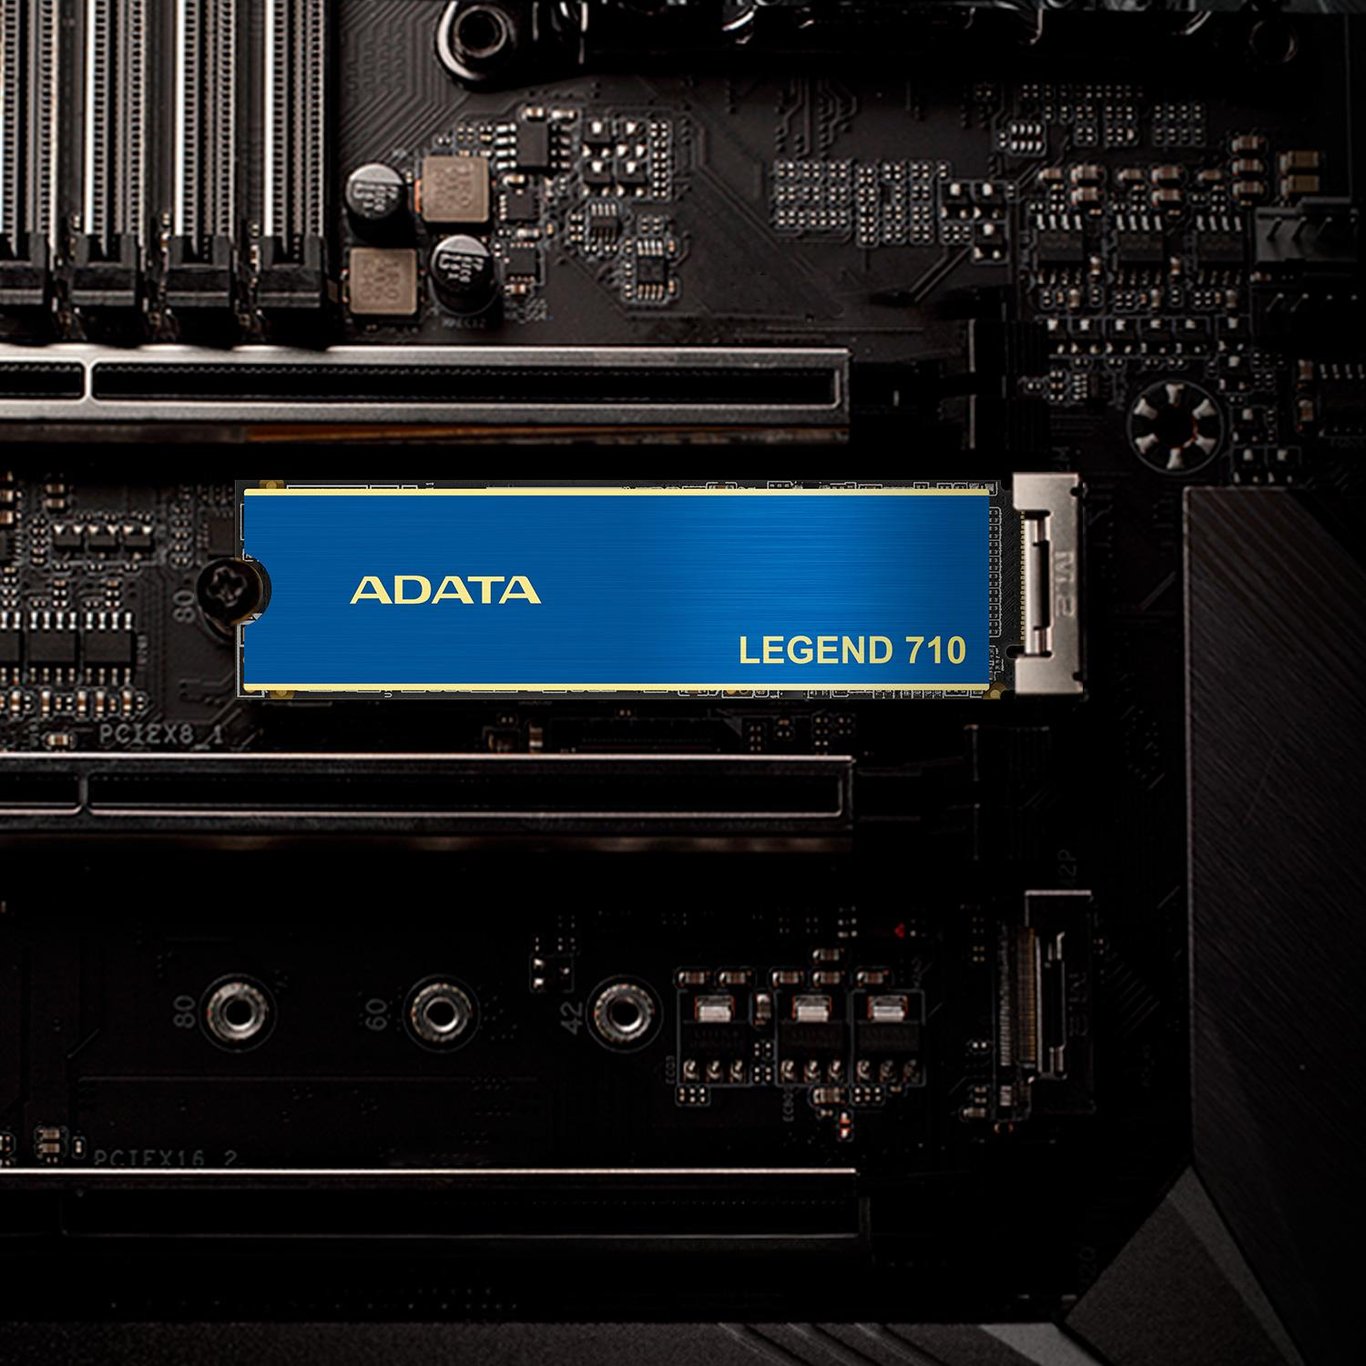 ADATA Legend 710 256GB QLC M.2 NVMe PCIe 3.0 x4 SSD